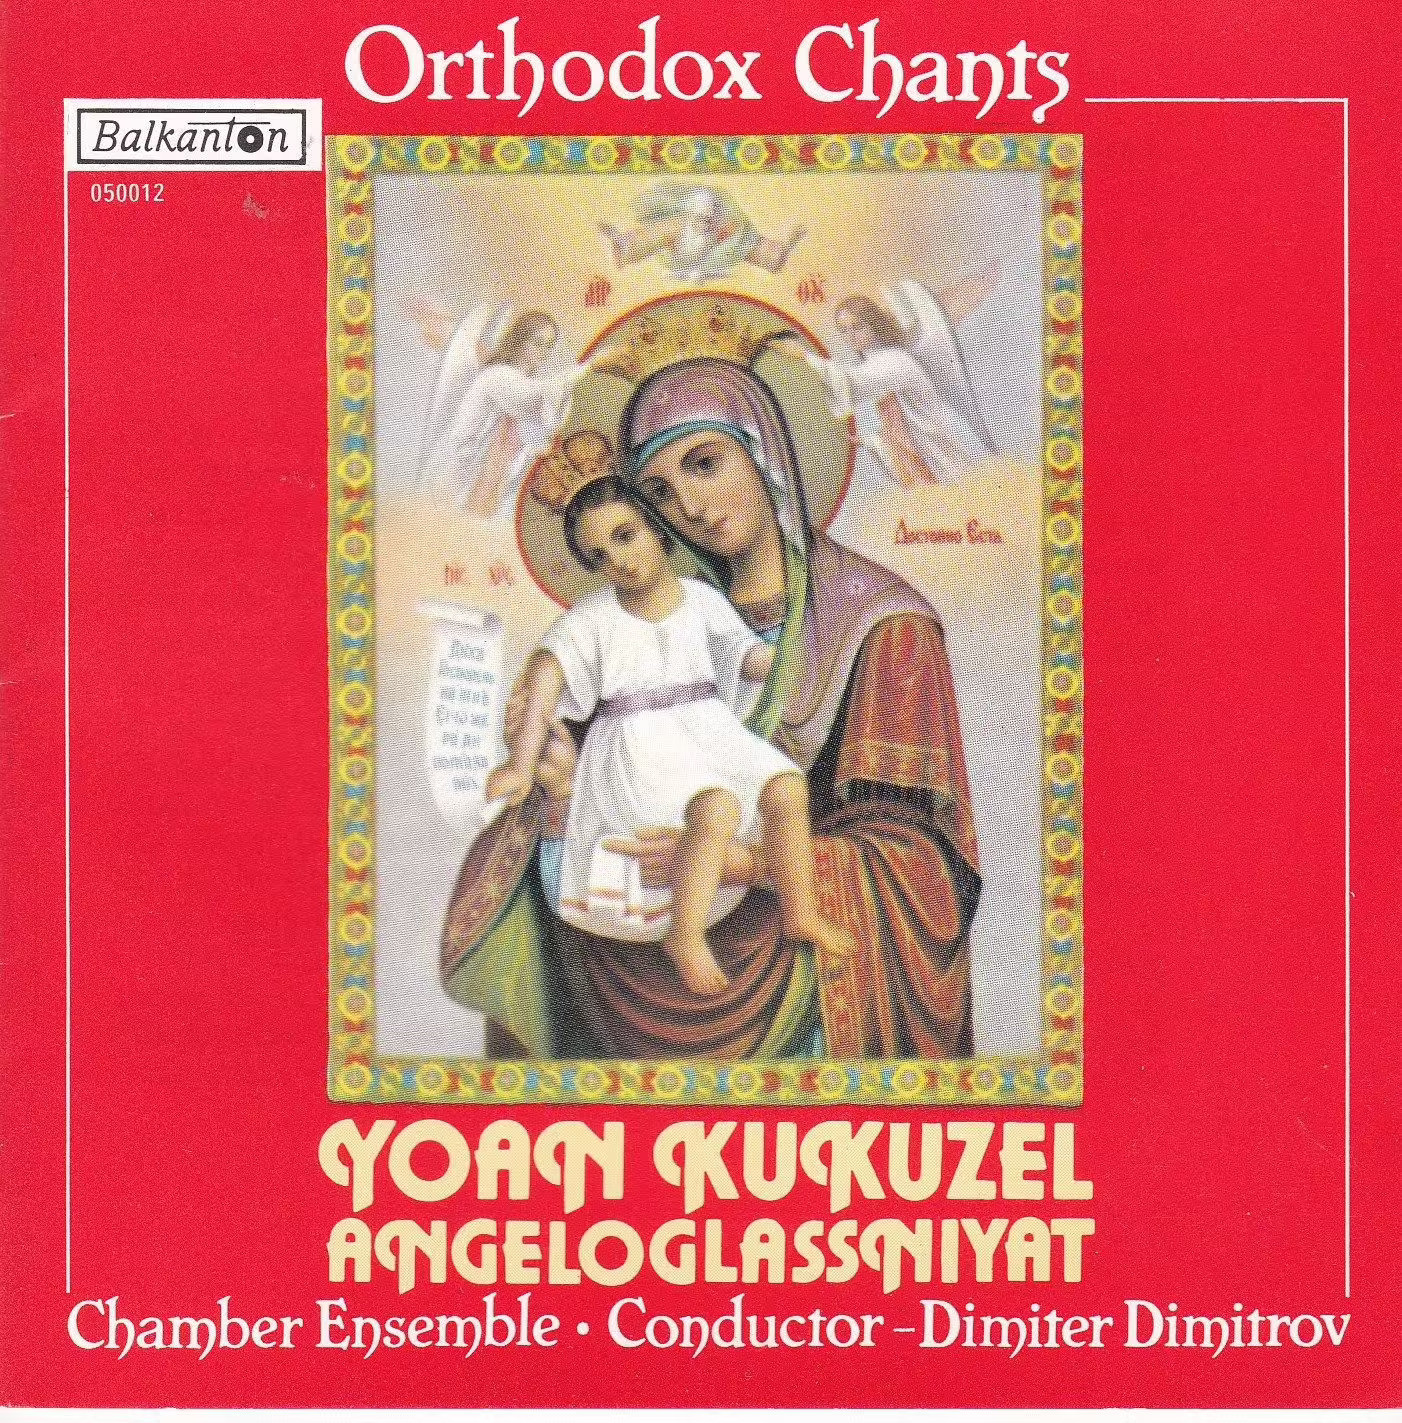 "Yoan Kukuzel Angeloglassniyat" Chamber Ensemble, conductor Dimiter Dimitrov. Orthodox Chants